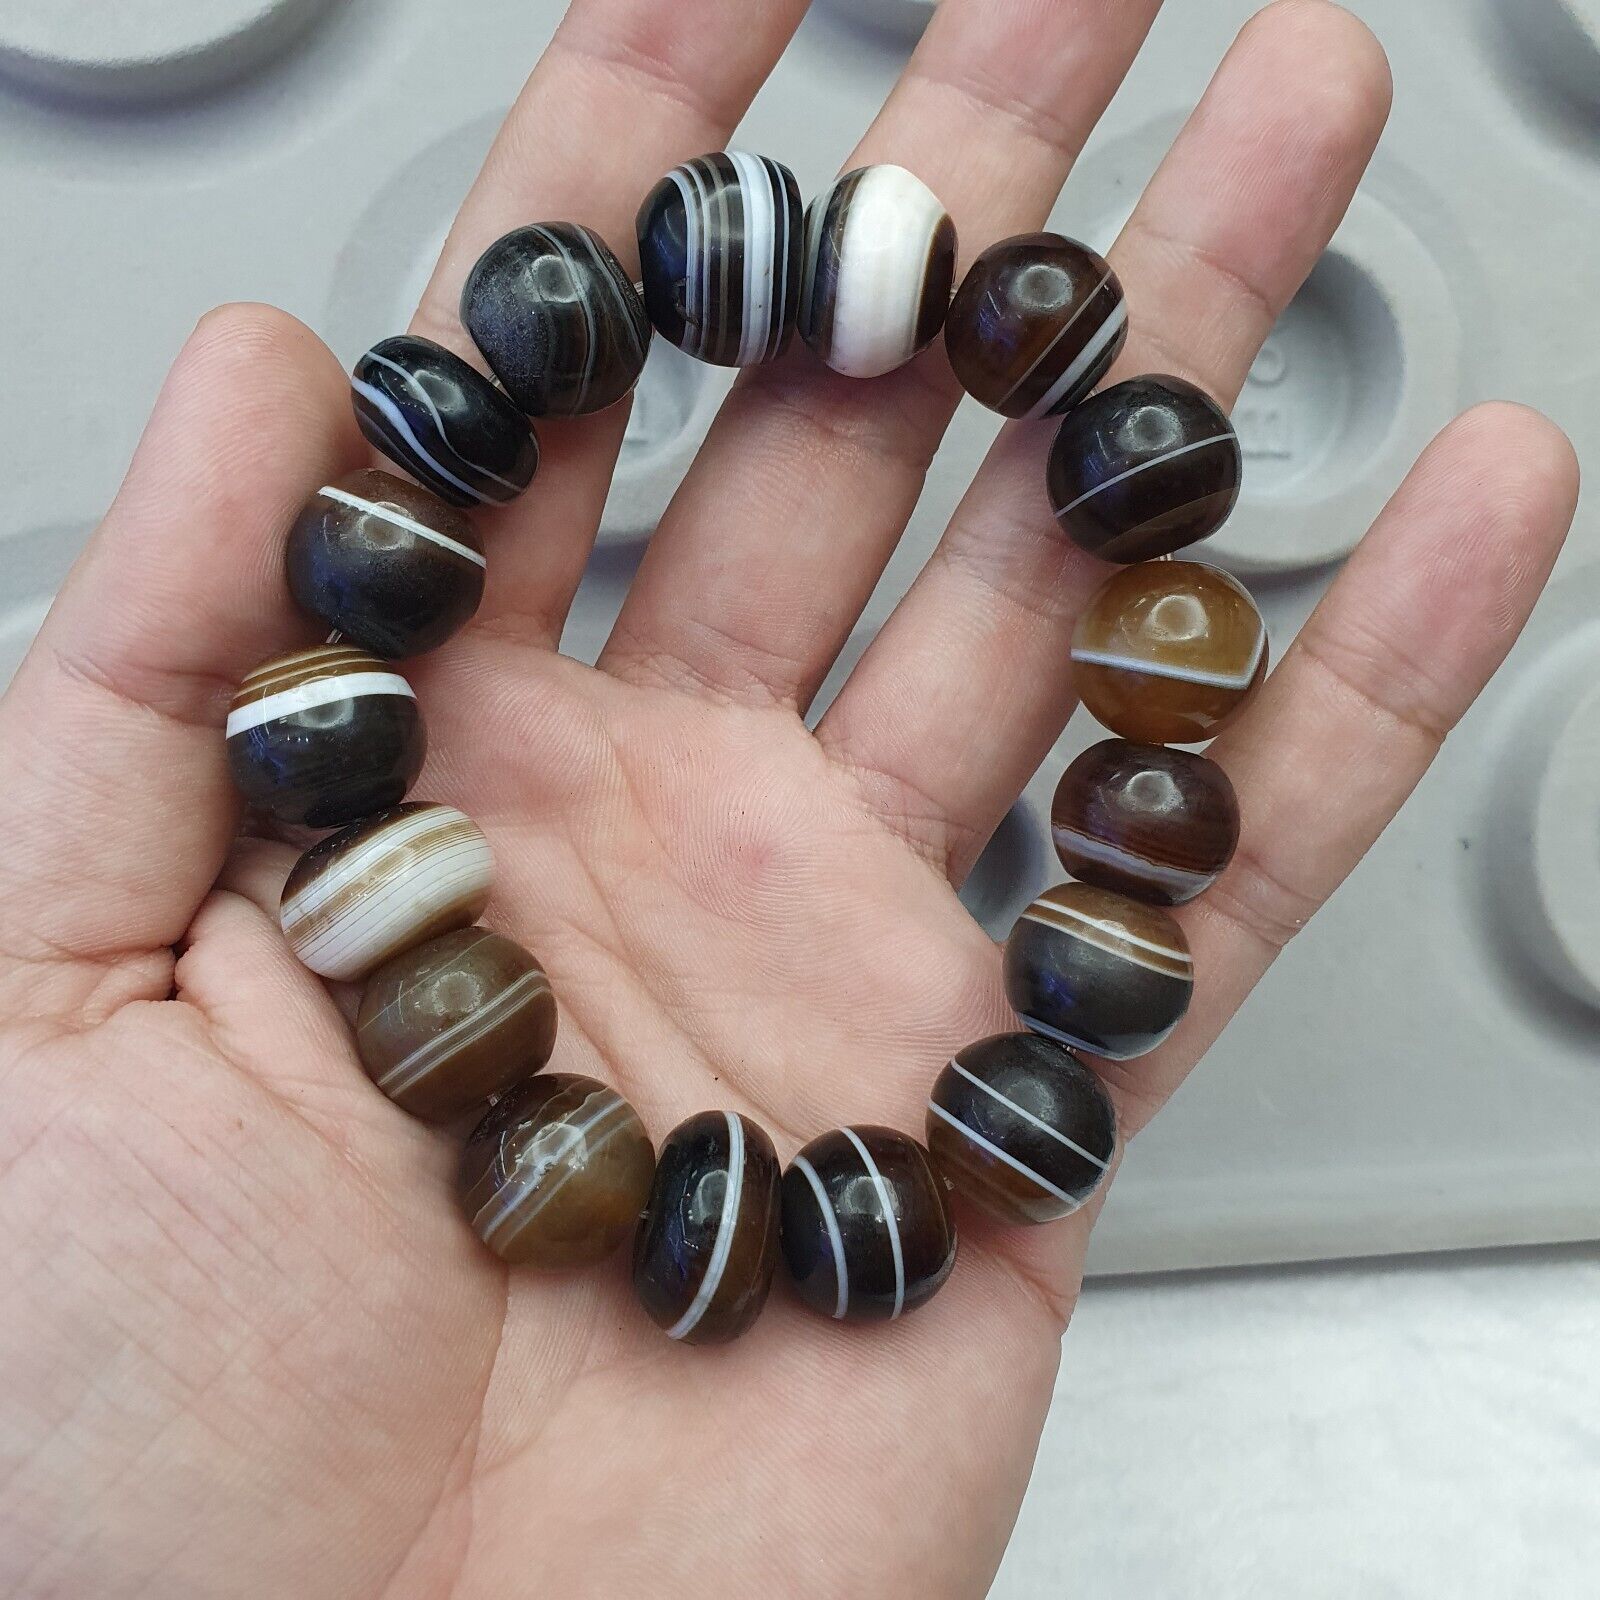 Antique Indo Tibetan Beads, Beaded Bracelet Amulet 15 Beads